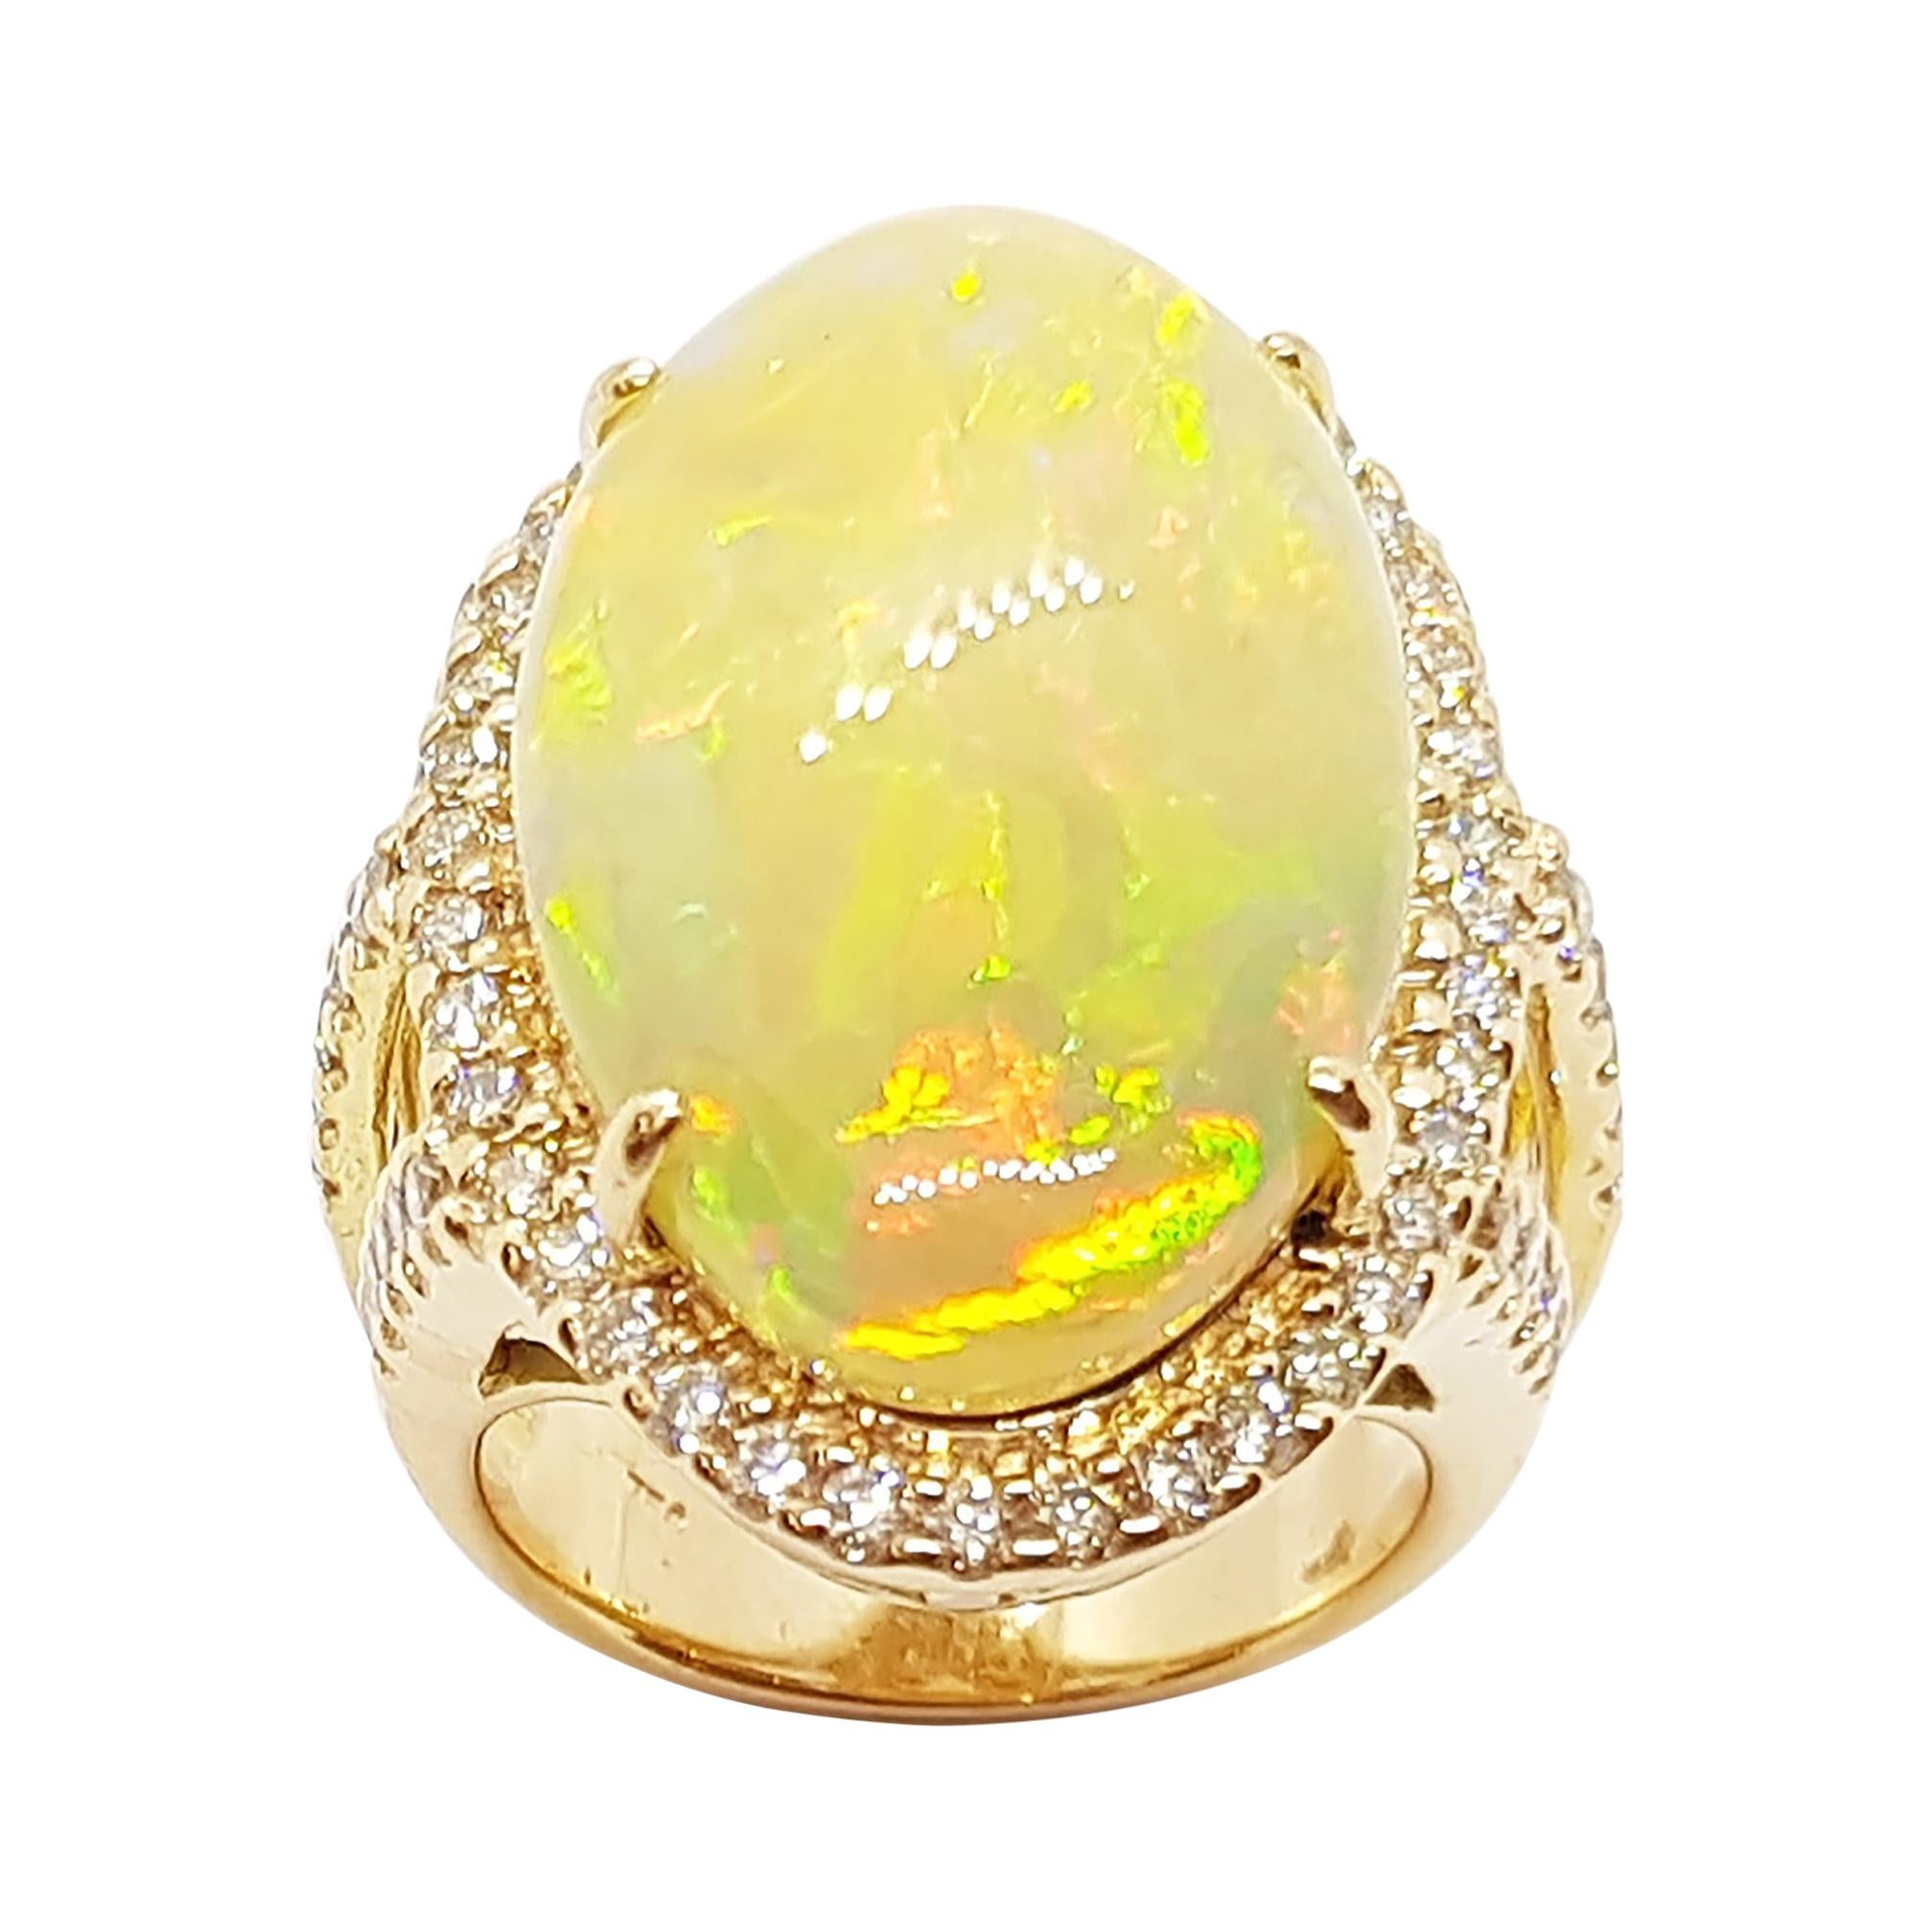 Opal with Brown Diamond Ring Set in 18 Karat Rose Gold Settings